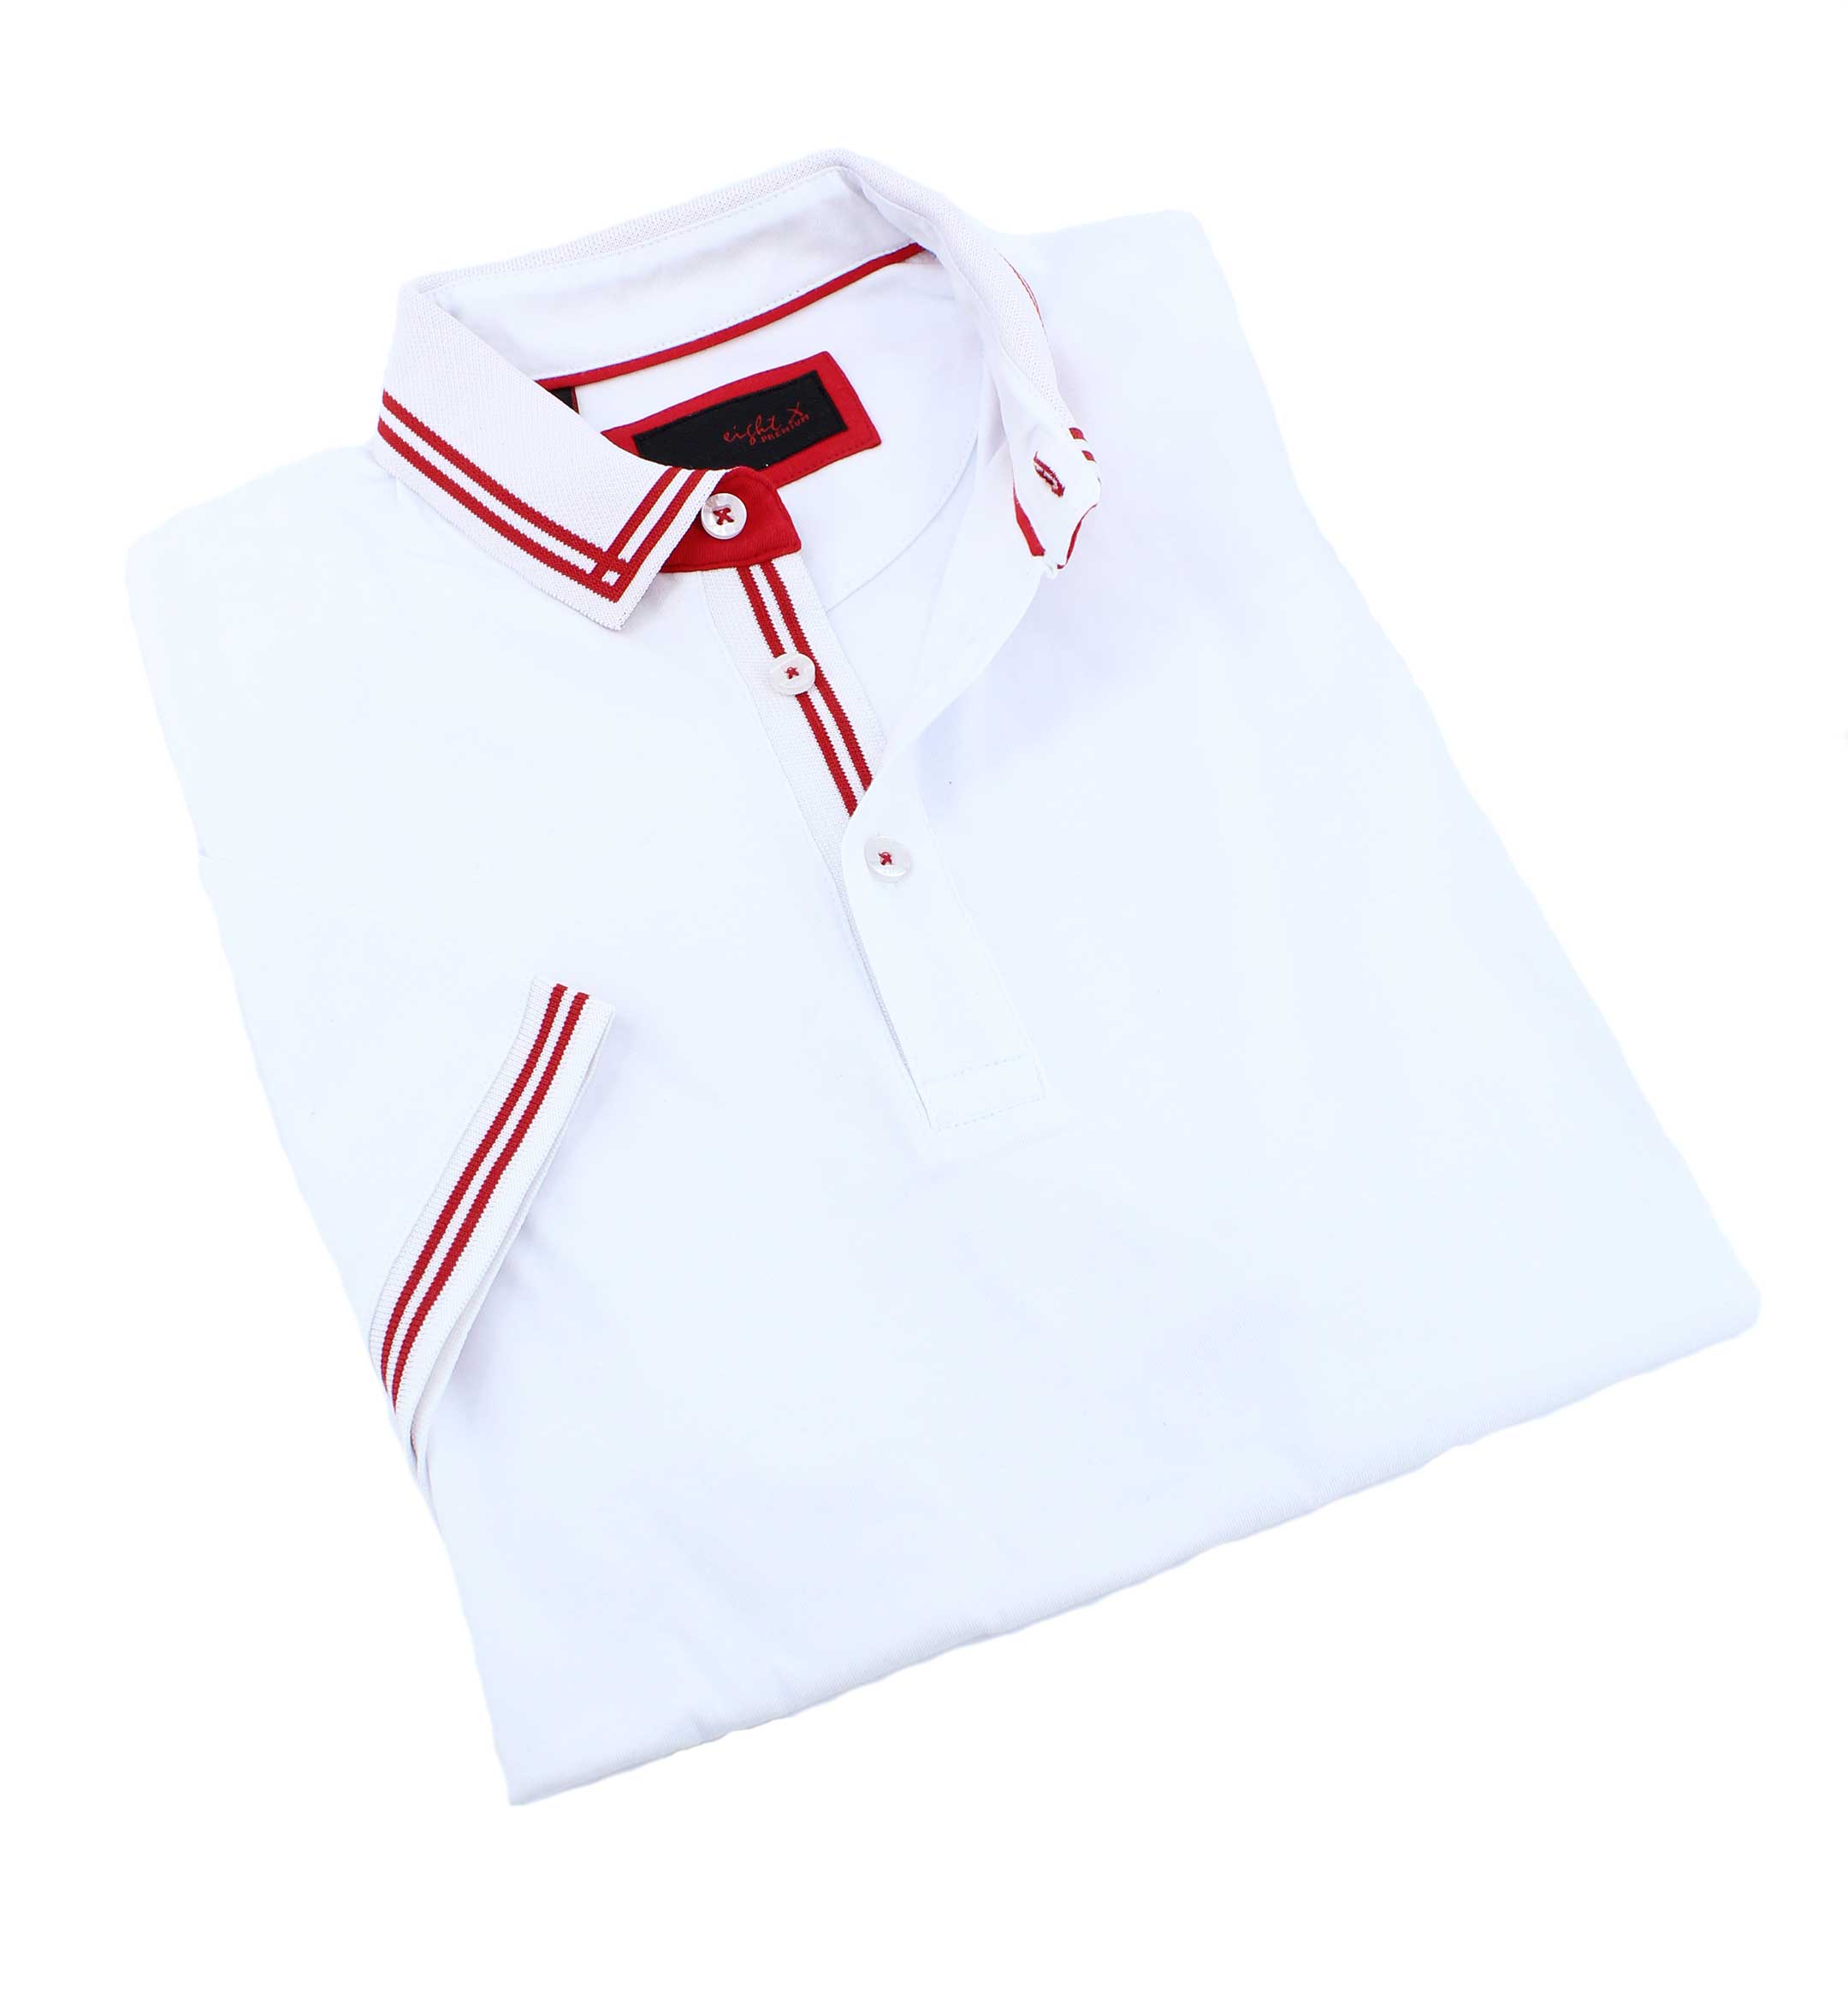 red and white designer shirt